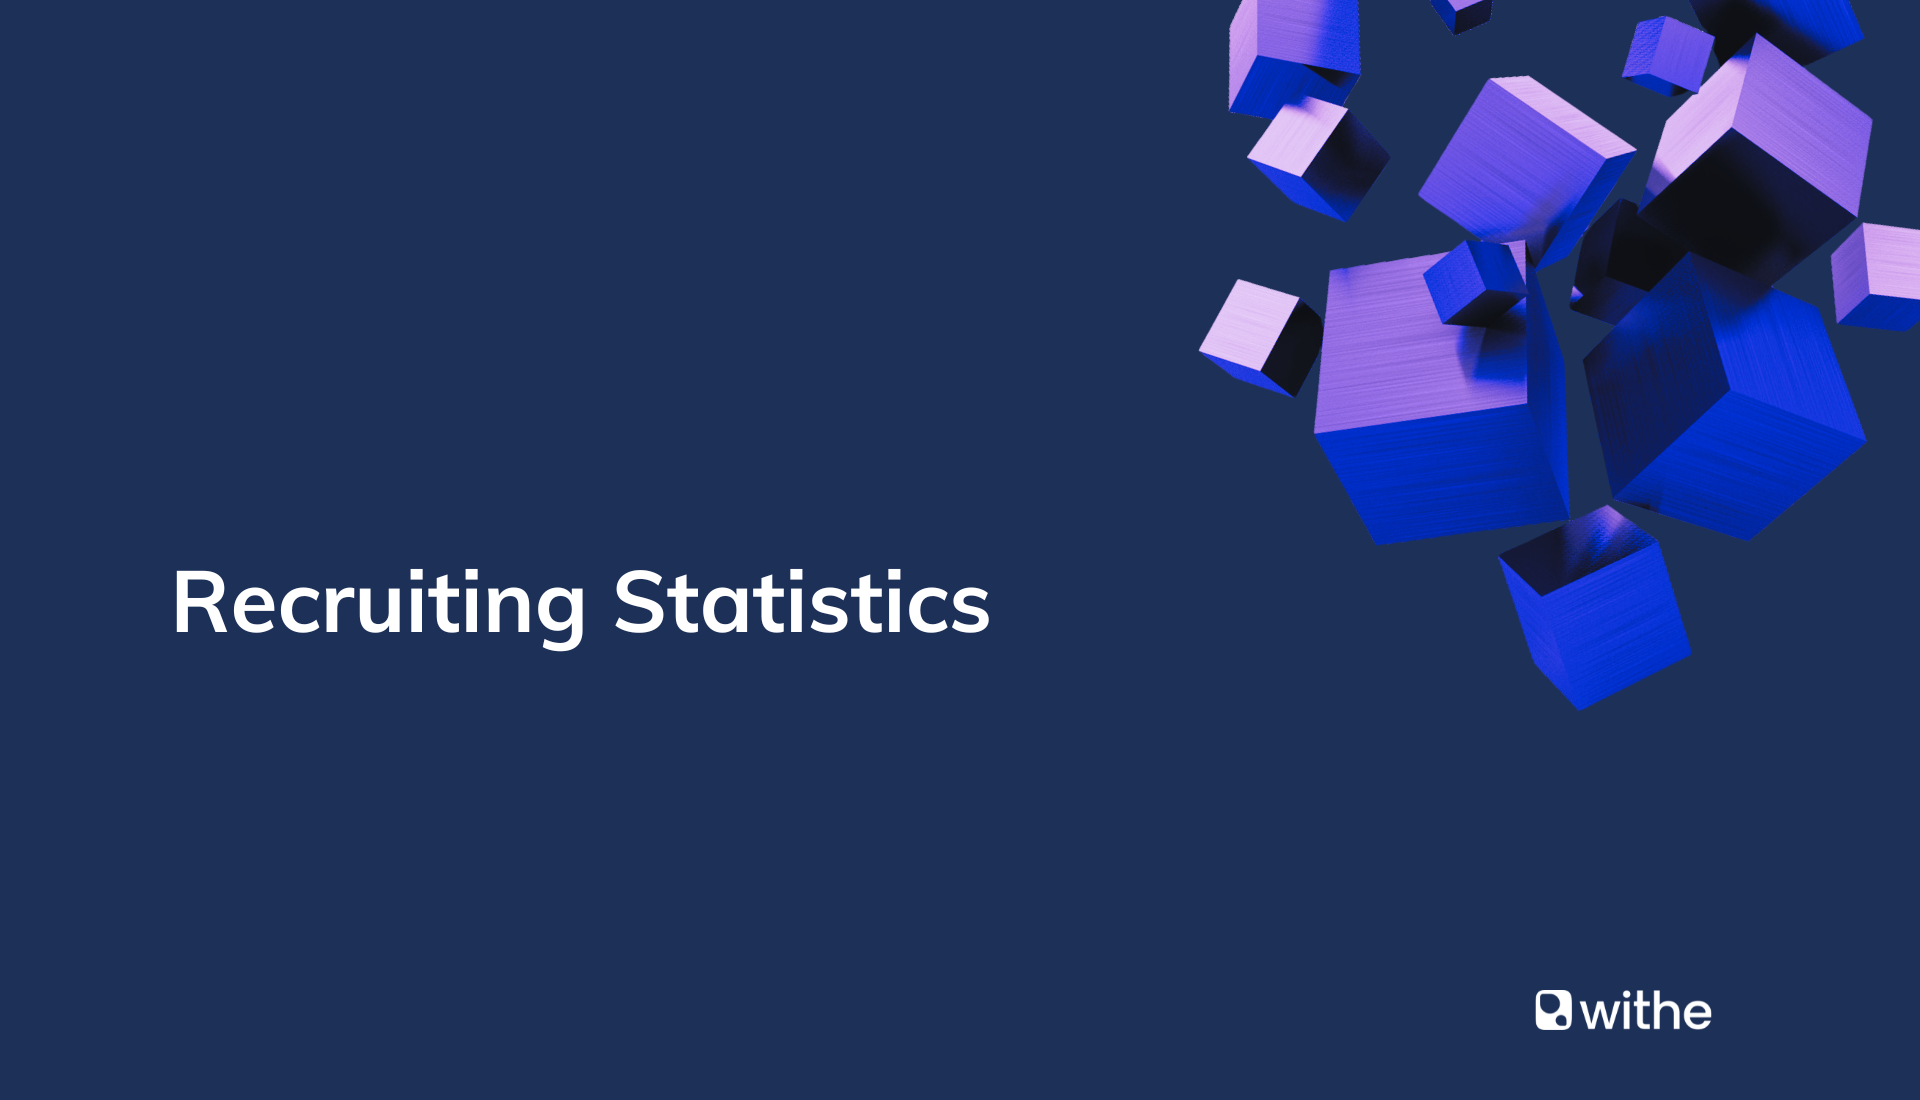 Recruiting statistics report